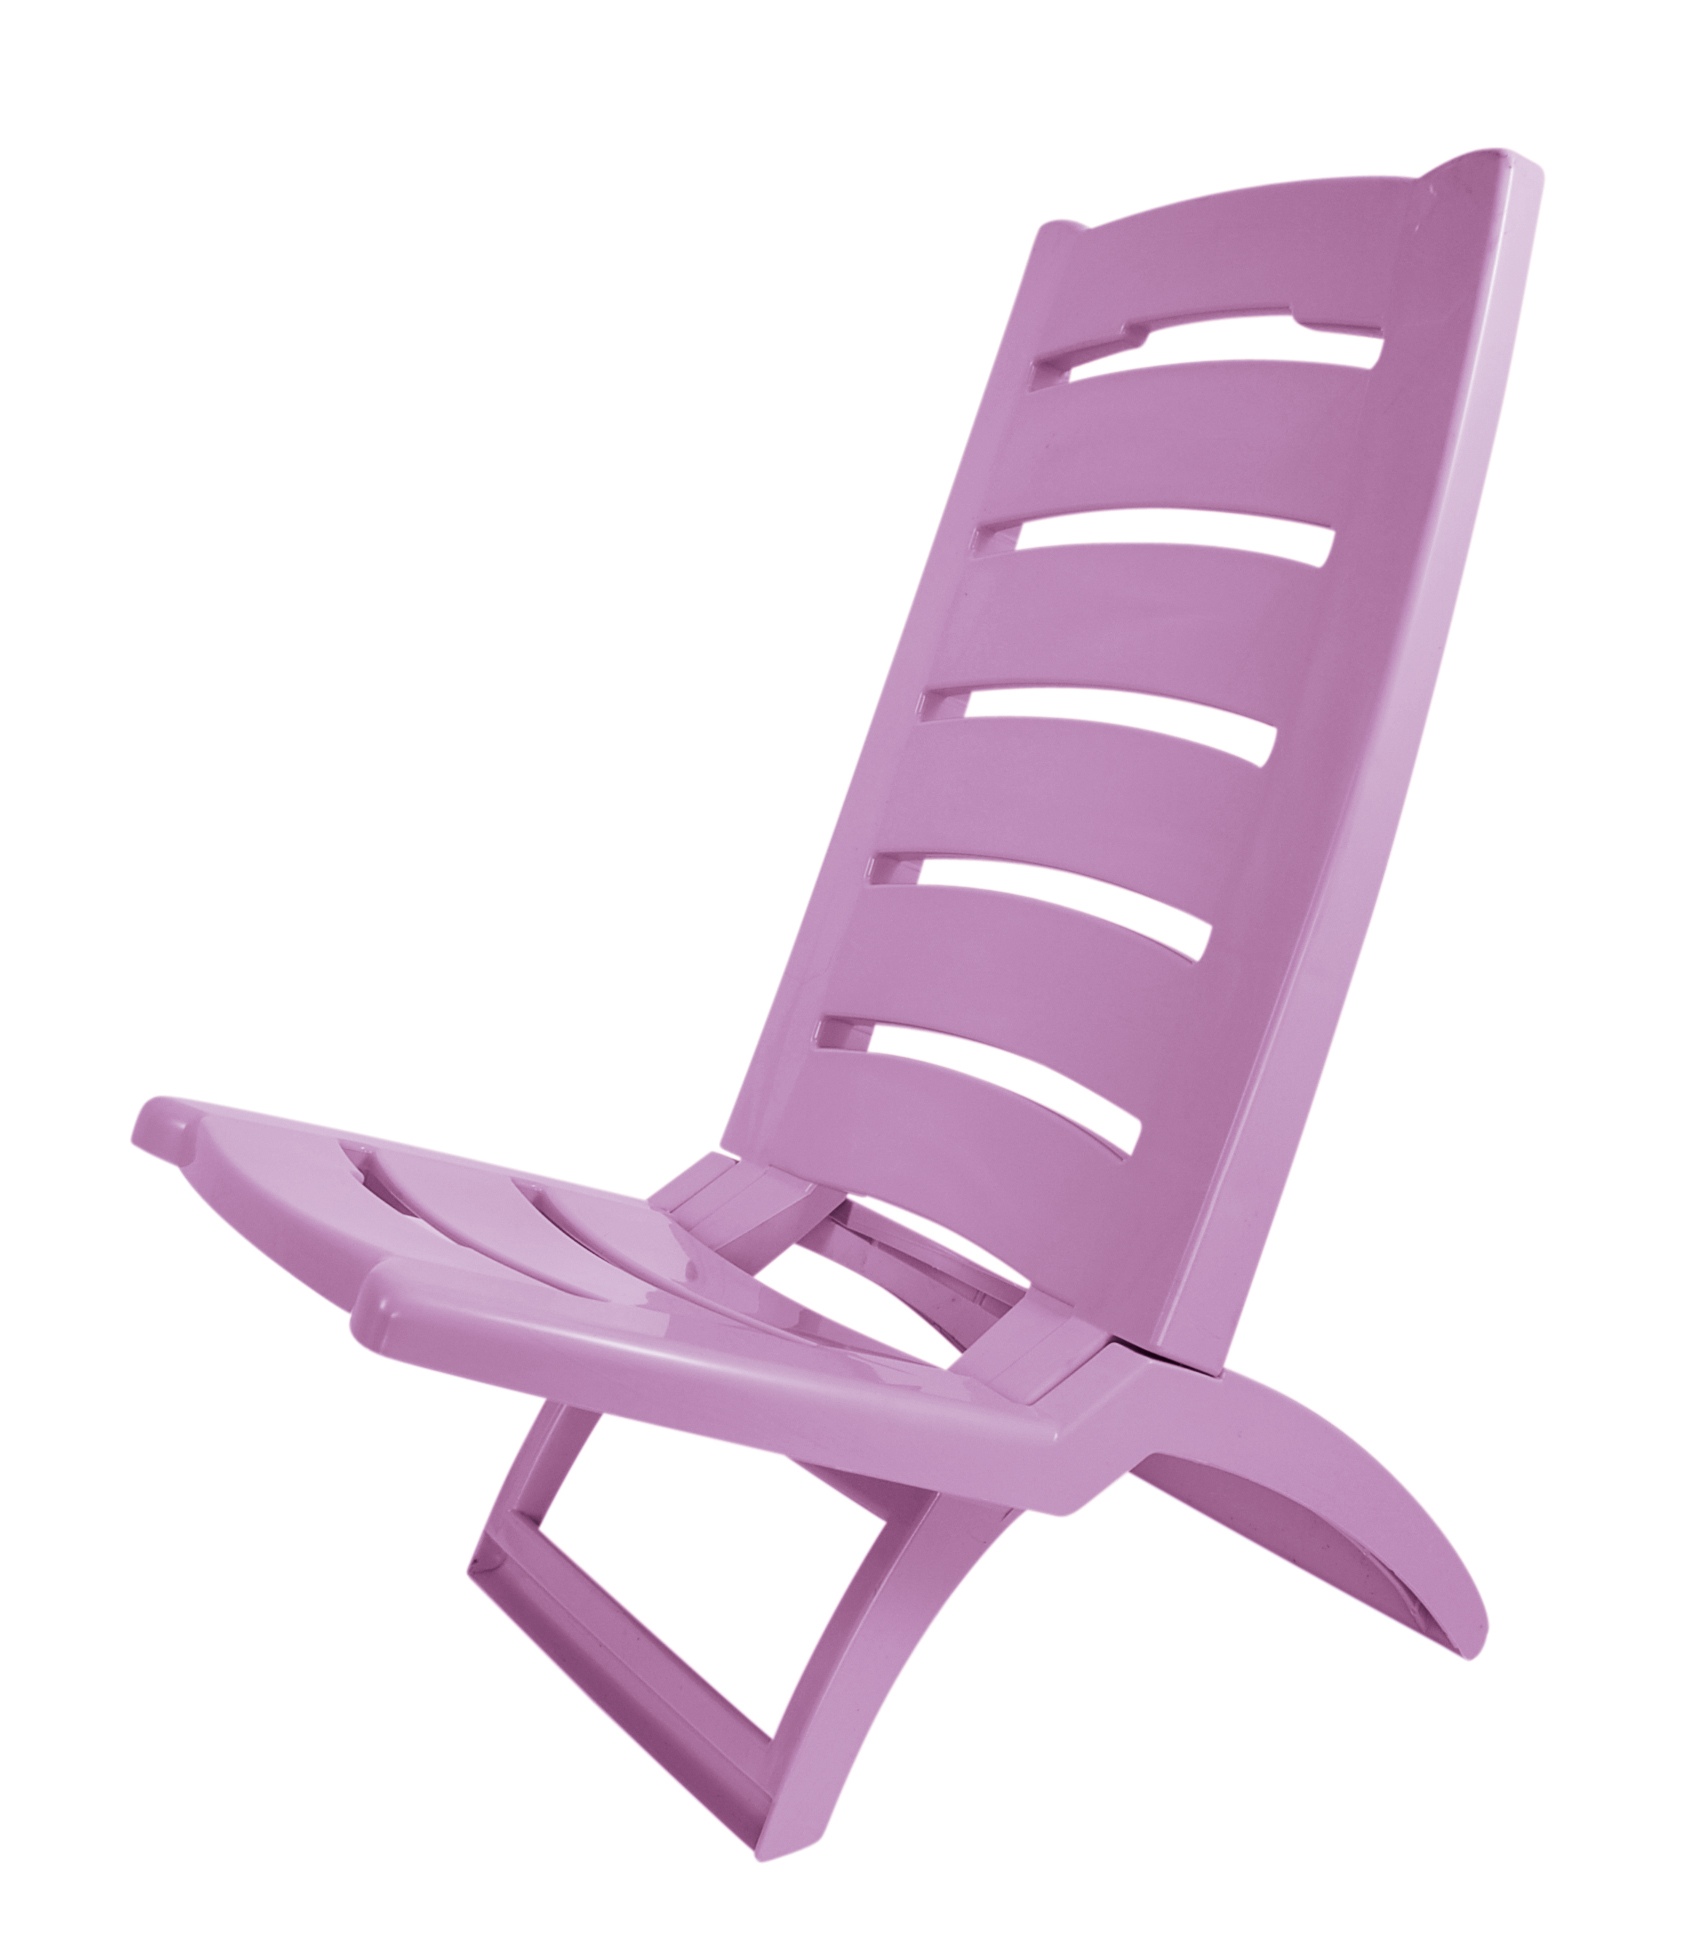 New Vinyl Folding Beach Chair for Simple Design